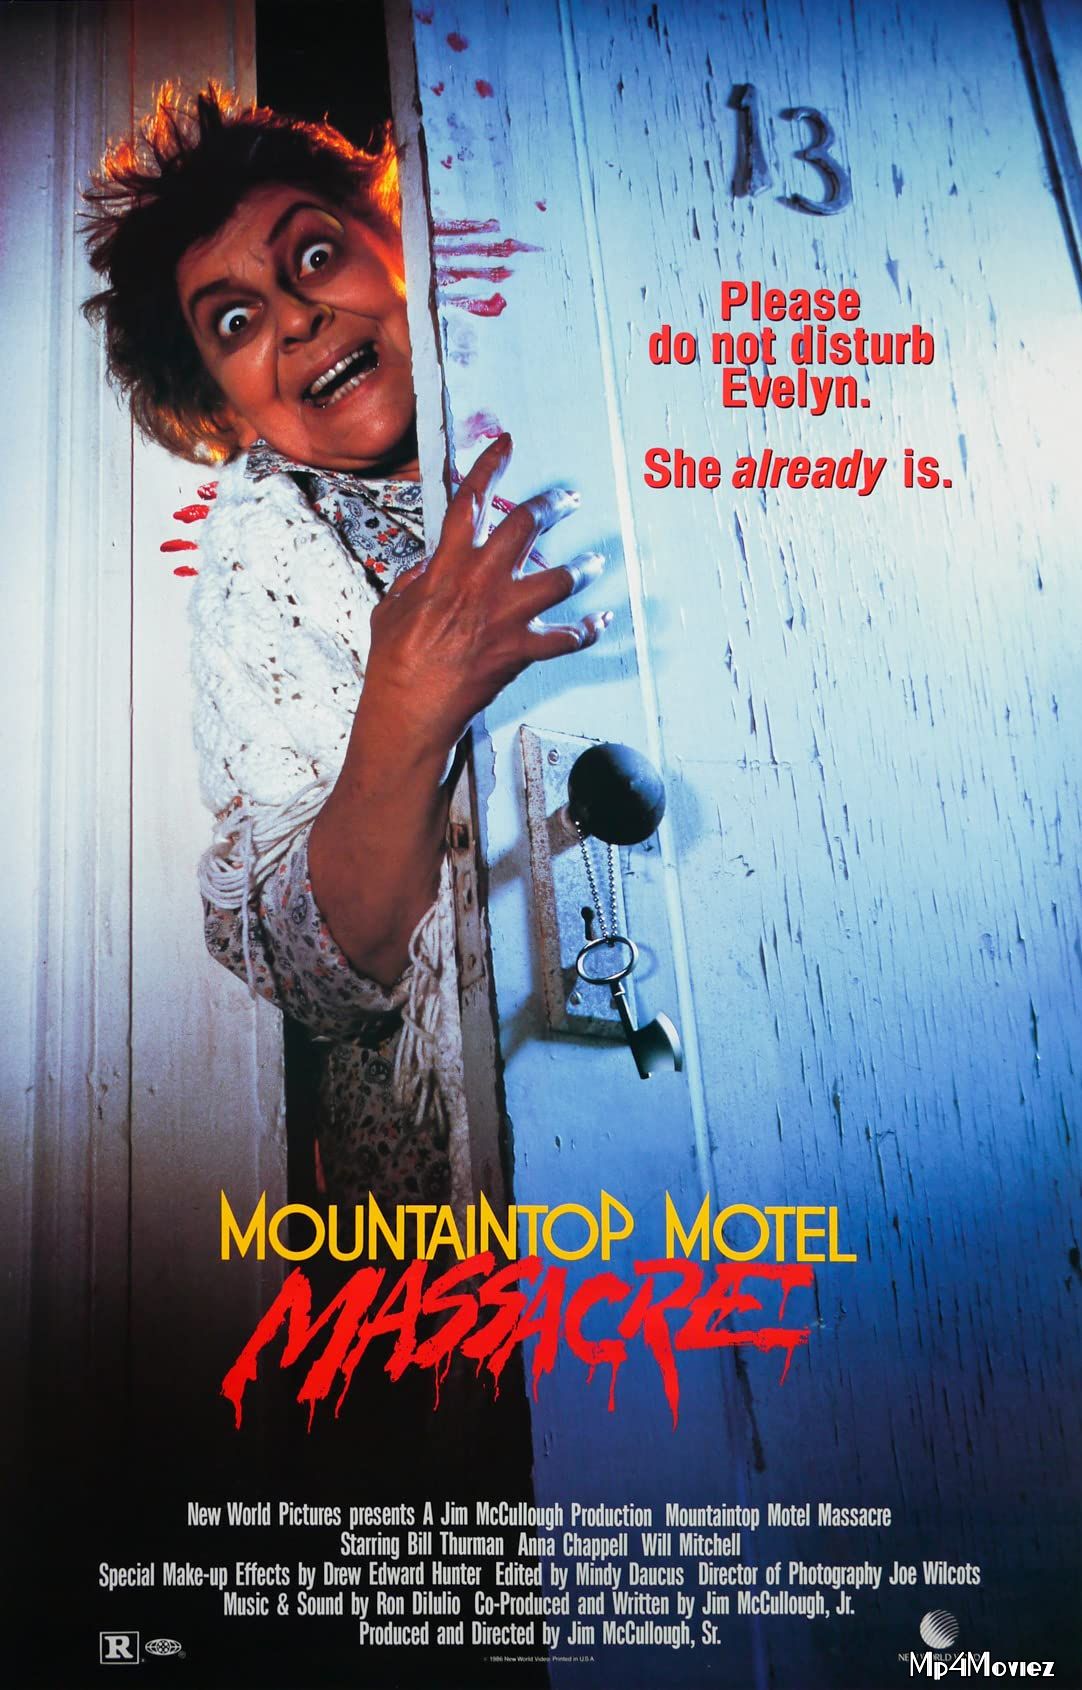 Mountaintop Motel Massacre 1983 Hindi Dubbed Full Movie download full movie